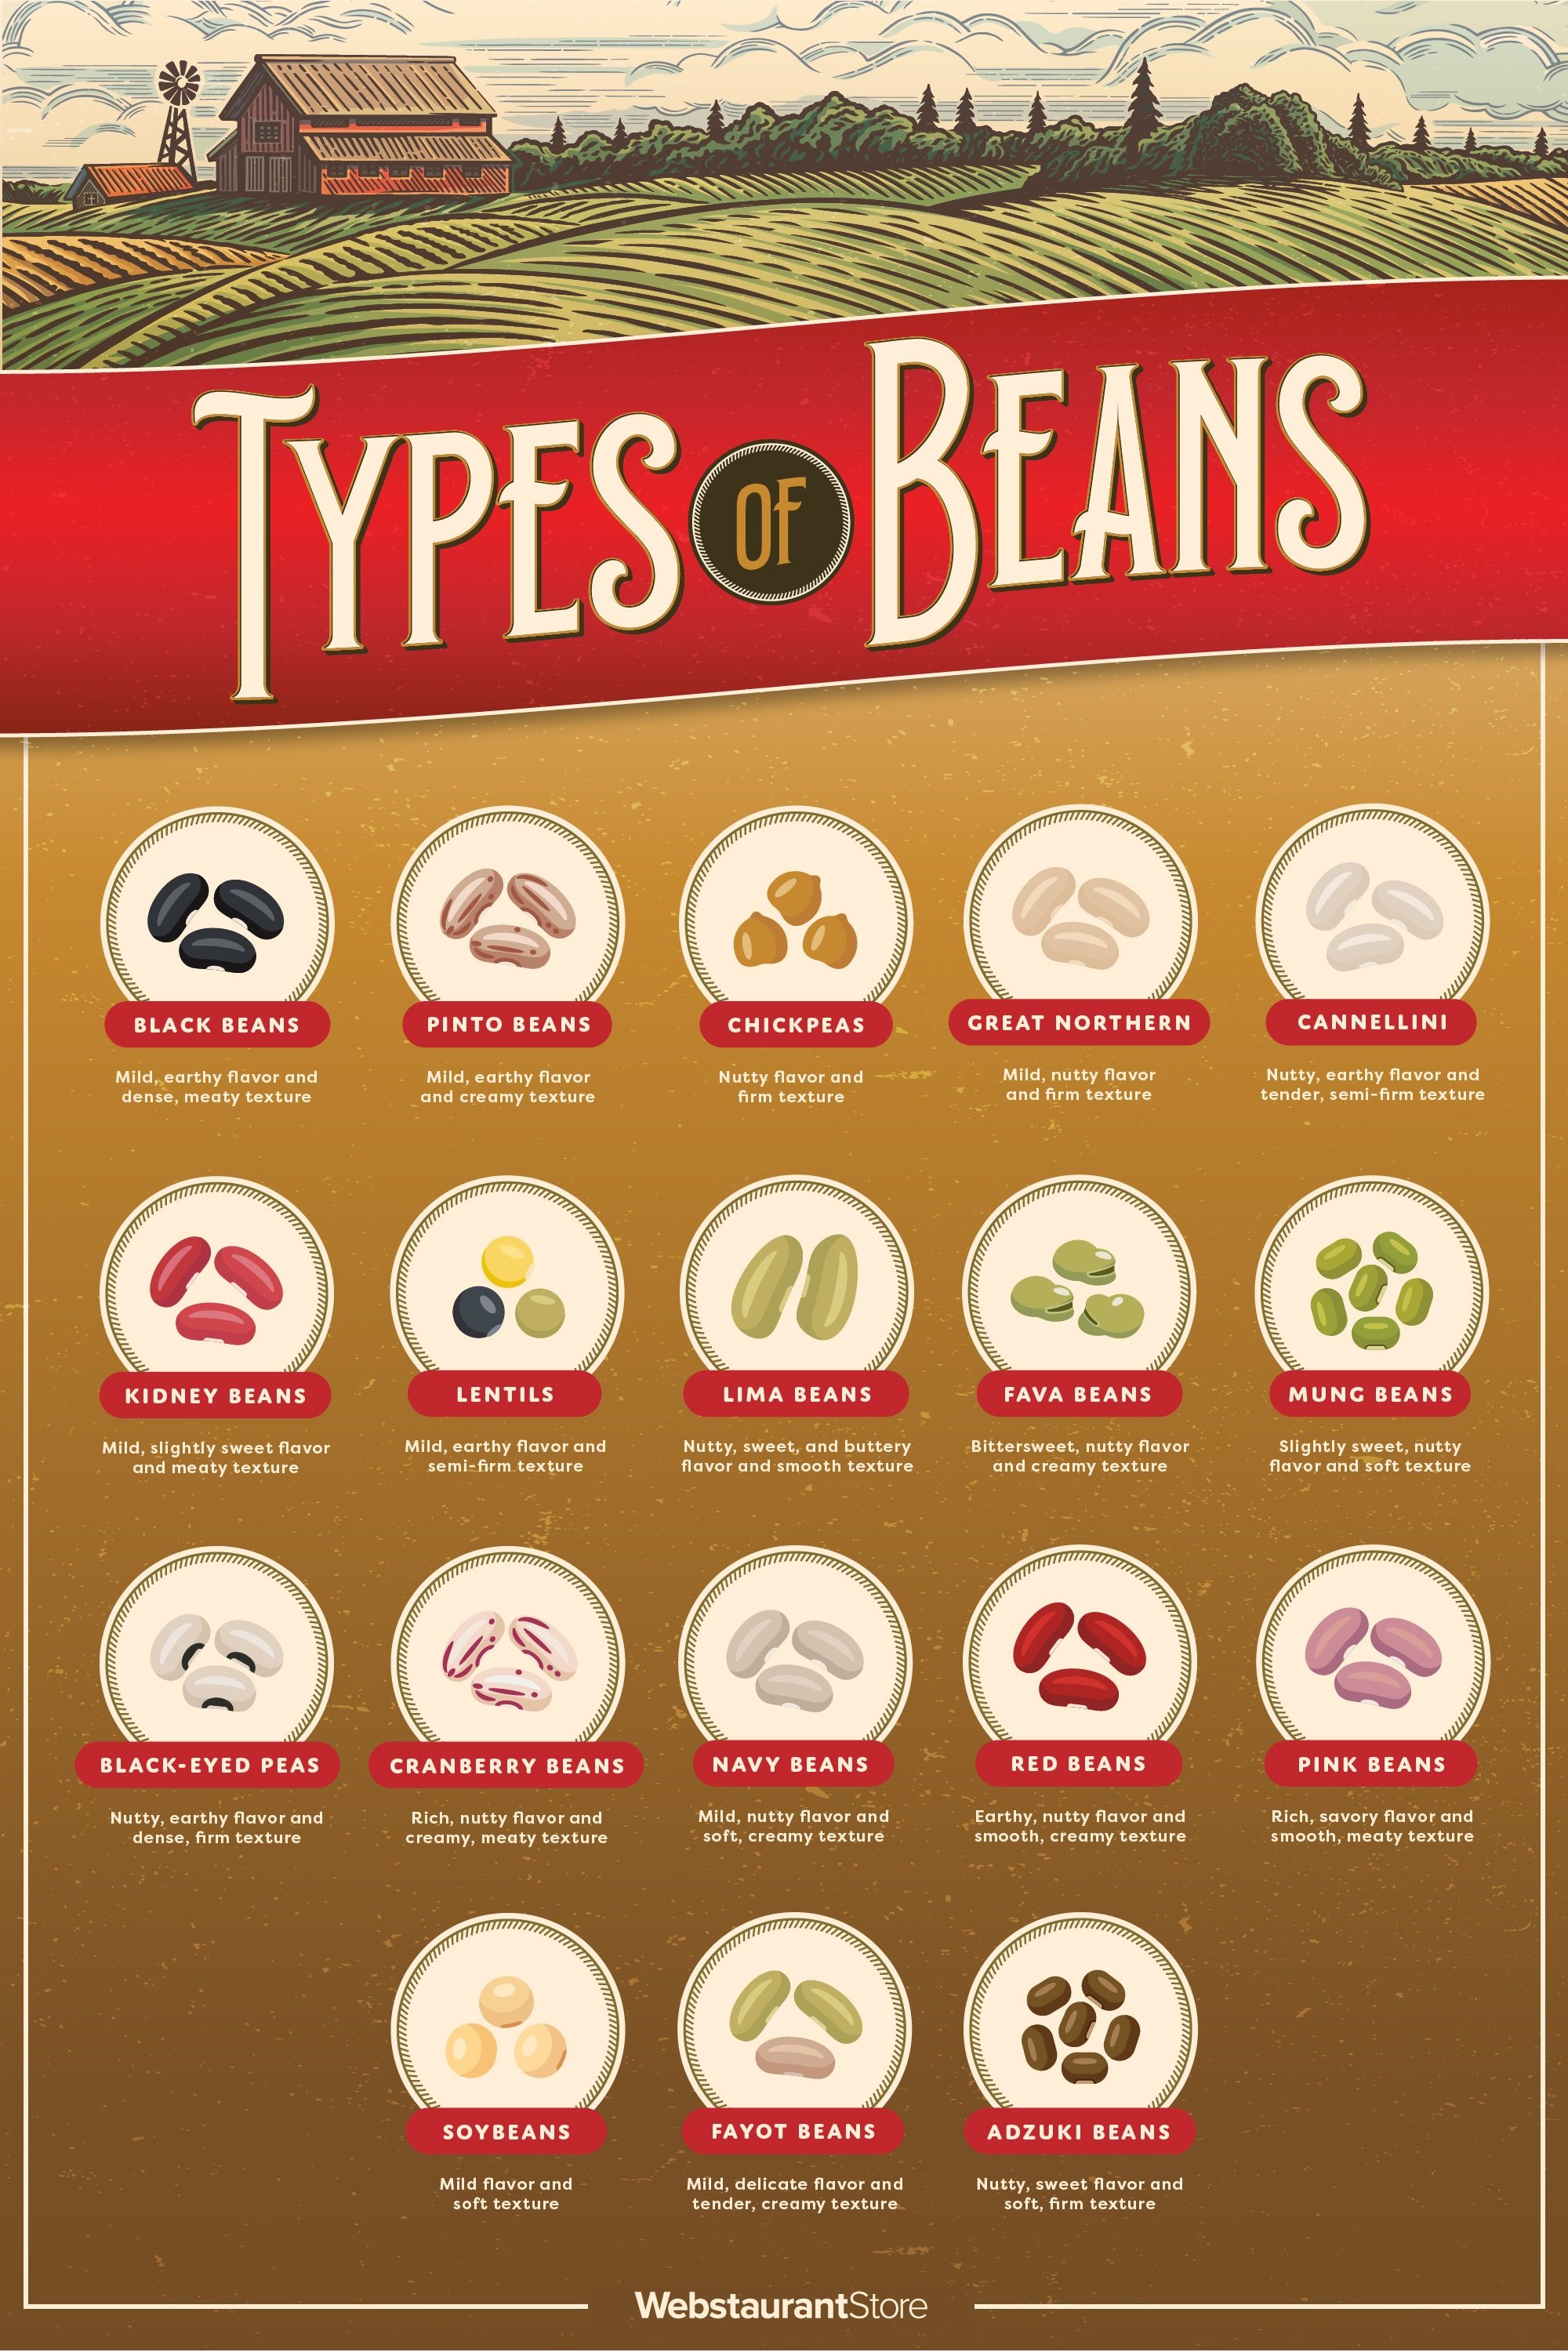 List of beans